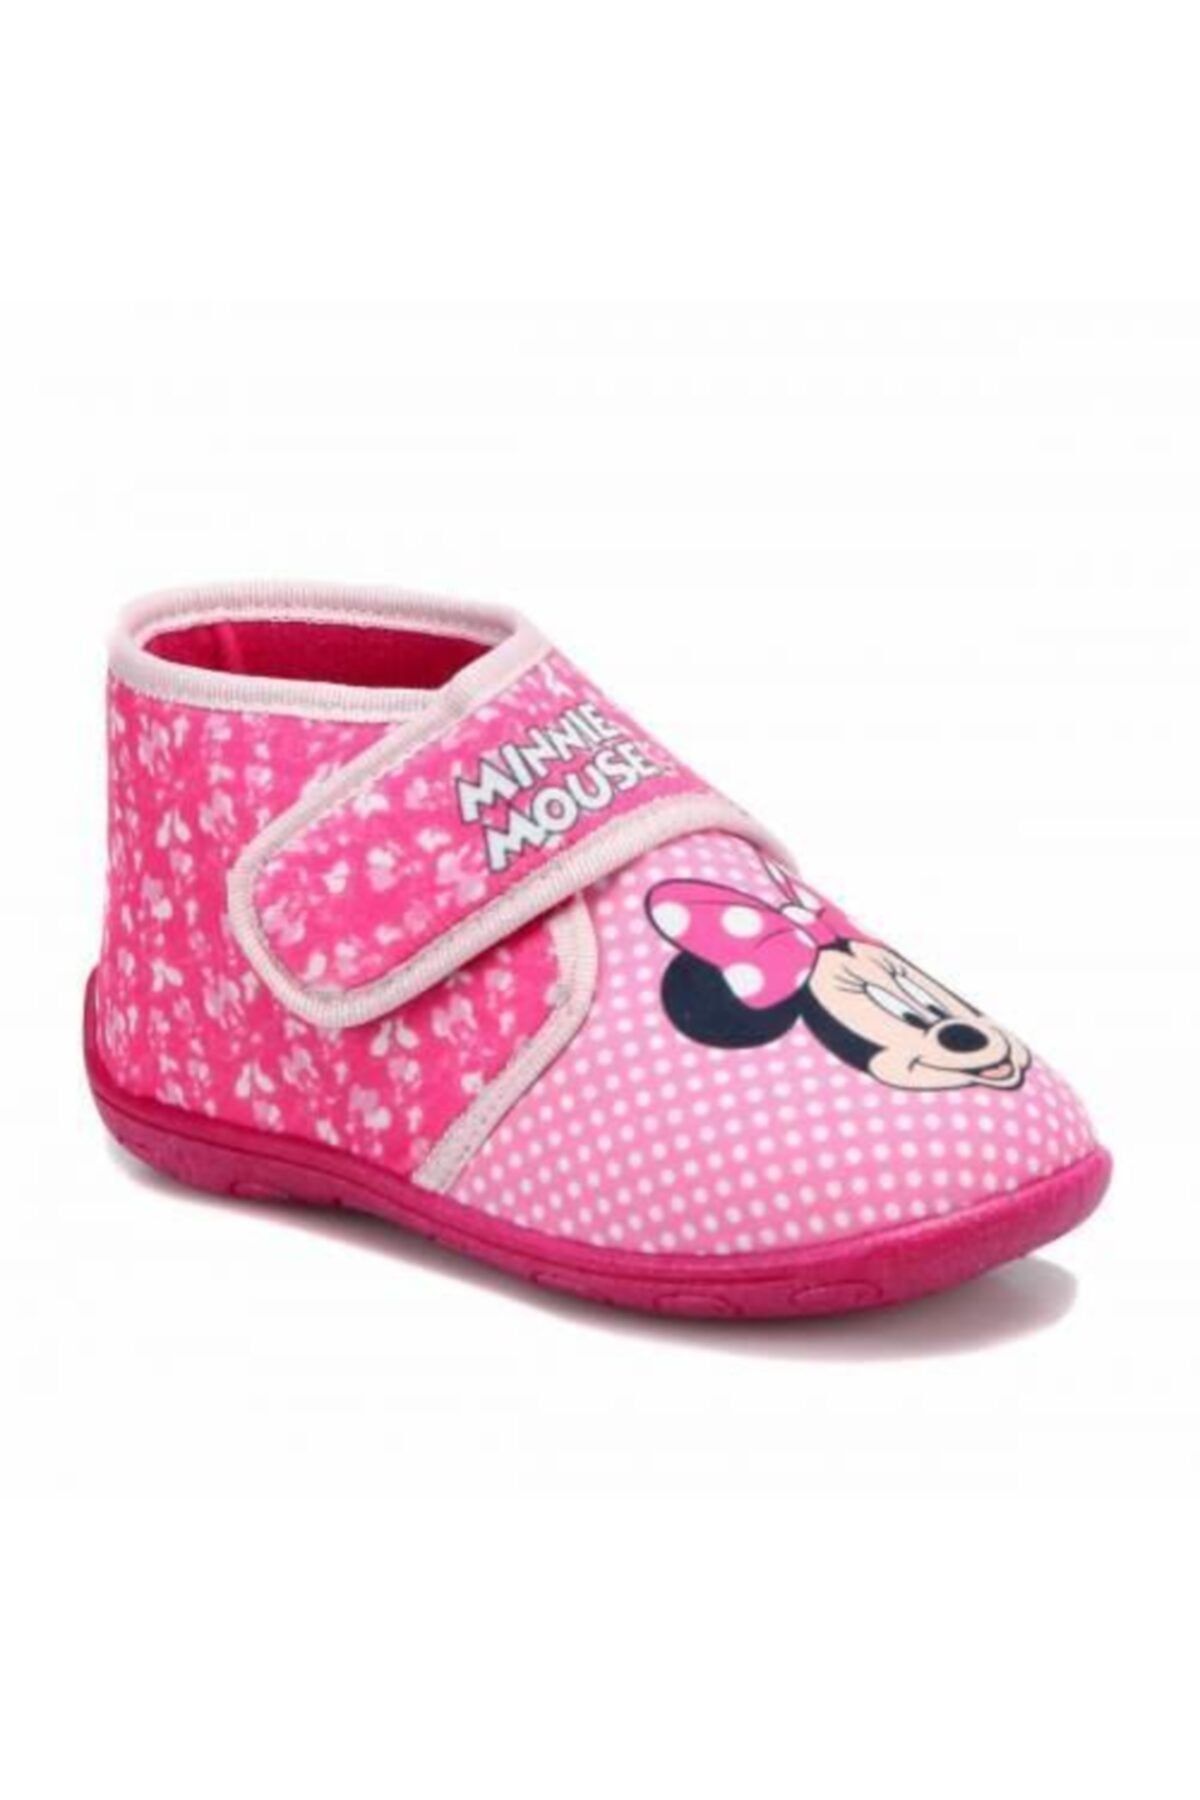 Hakan Çanta Kız Çocuk Pembe Minnie Mouse 90063x Çocuk Panduf Ev Okul Kreş Ayakkabısı